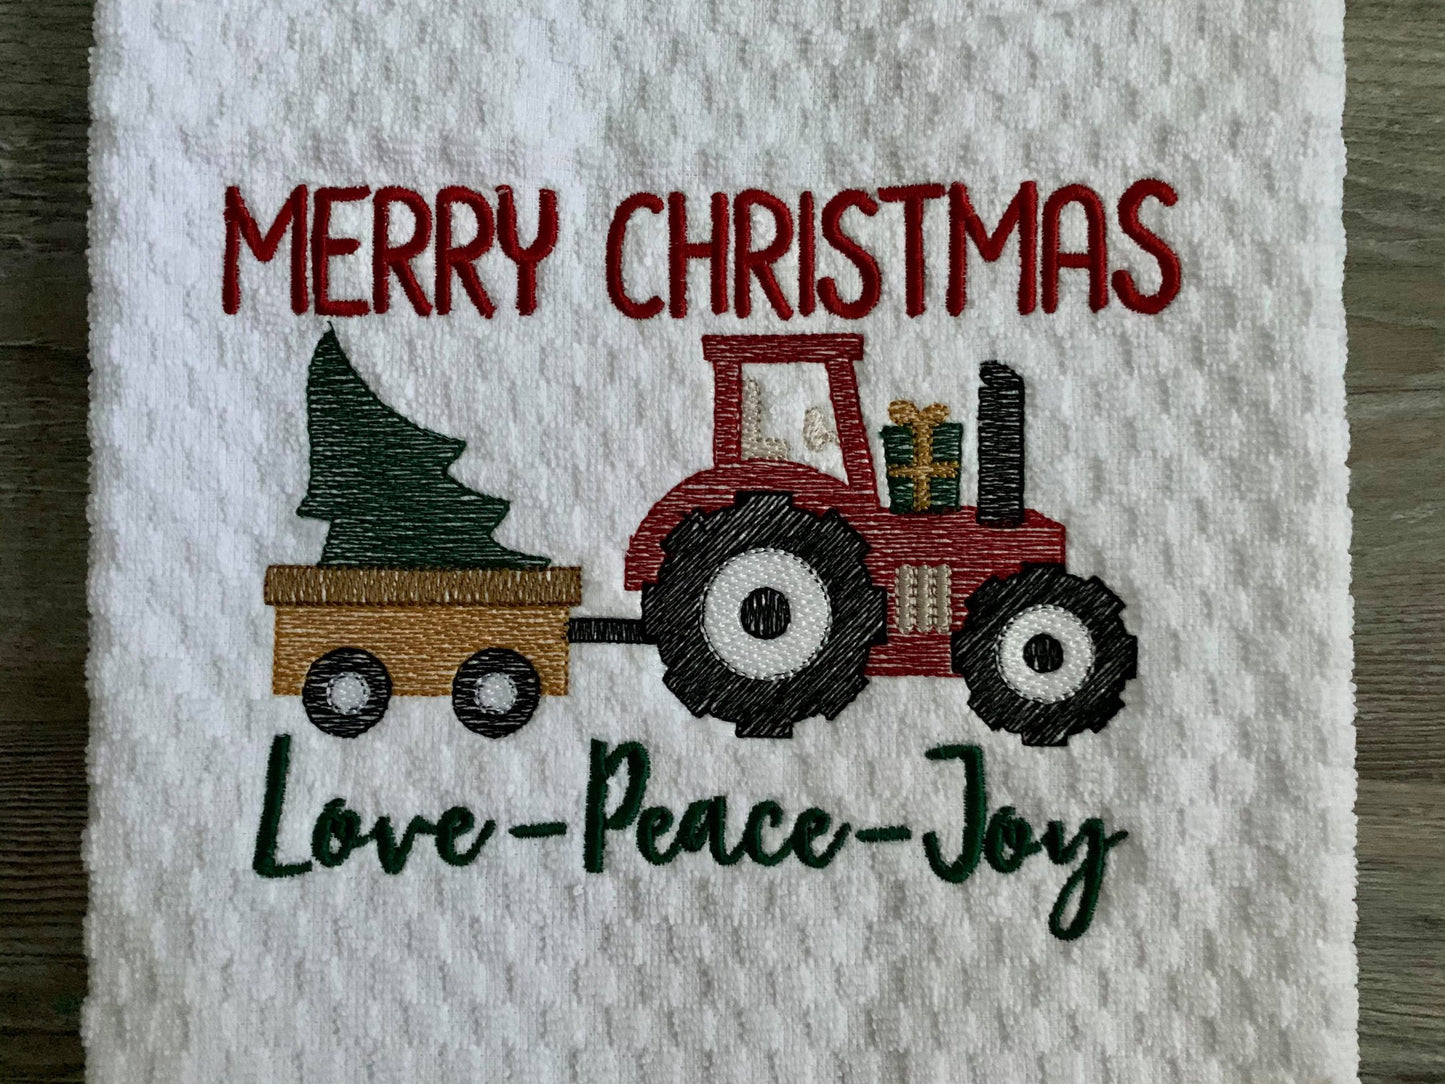 Merry Christmas Love Peace Joy - 2 Sizes - Digital Embroidery Design